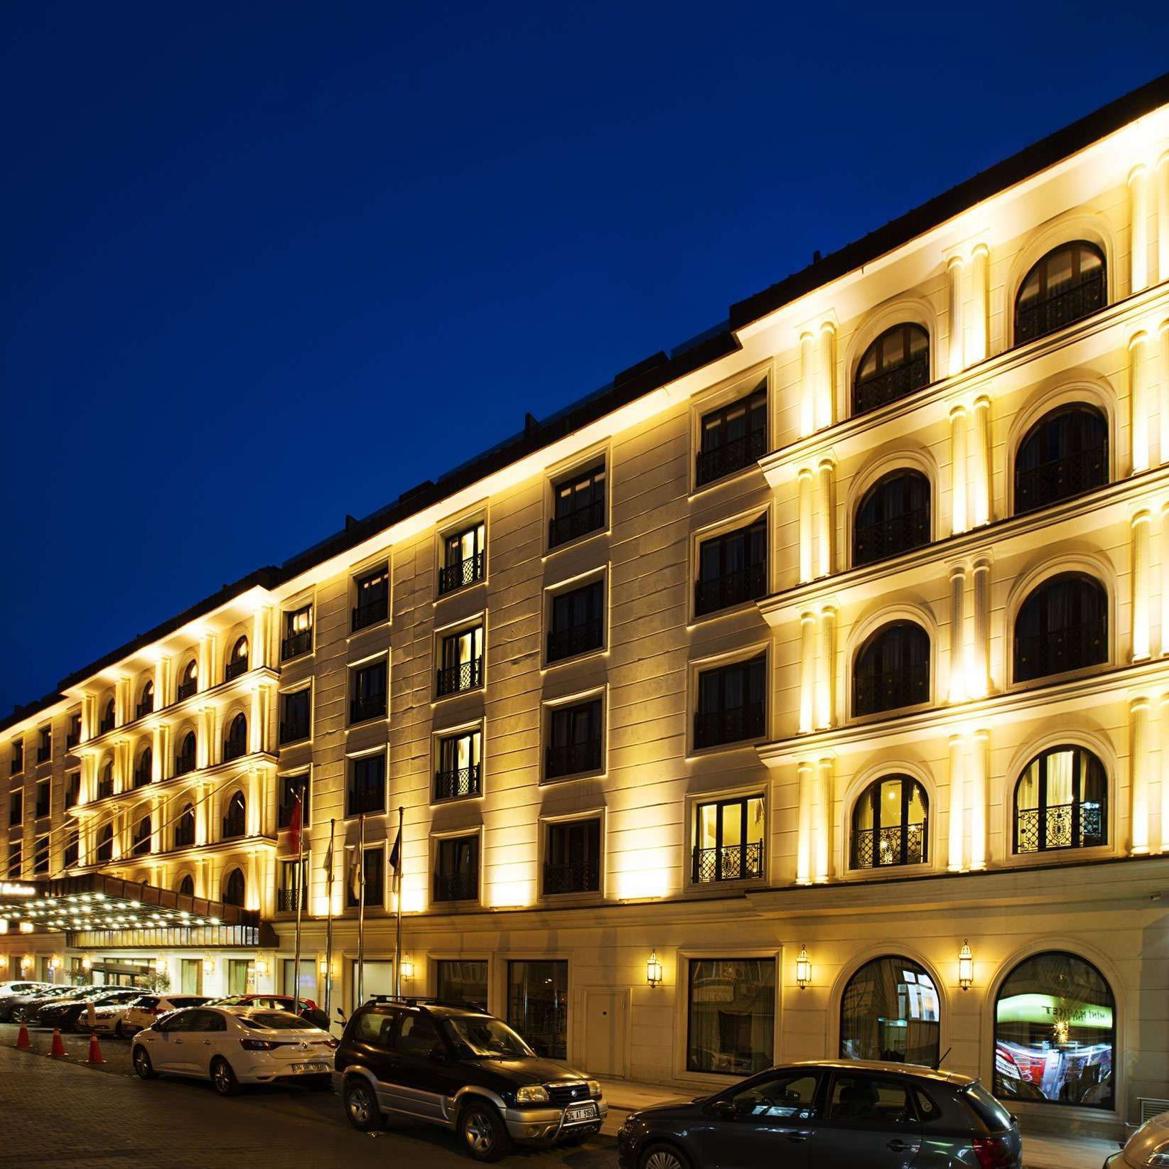 Ottoman's Life Hotel Deluxe deluxe hotel